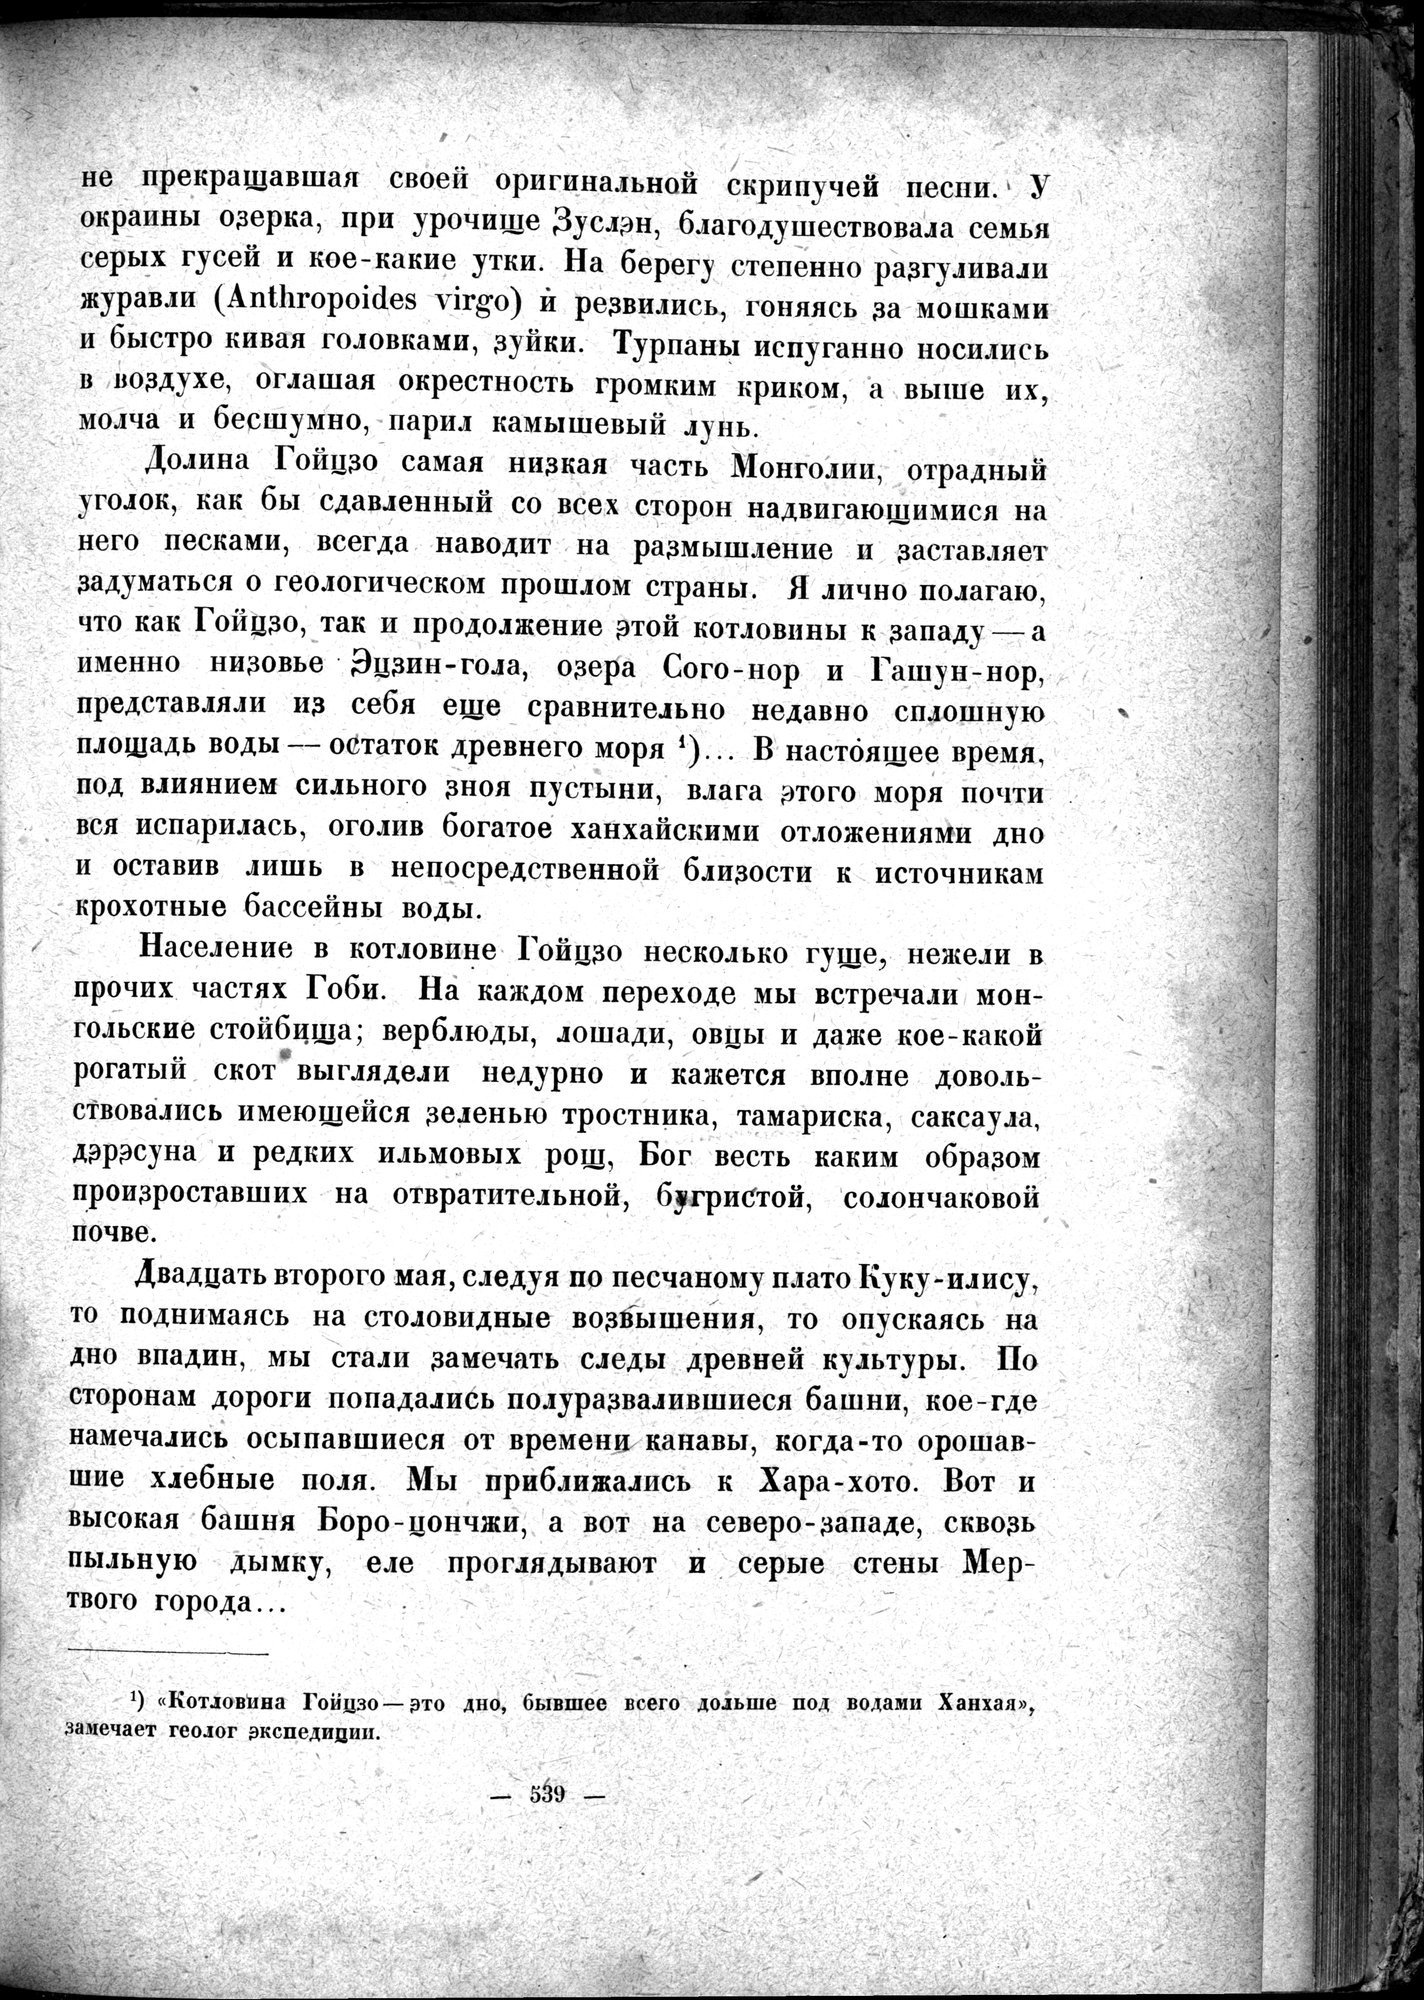 Mongoliya i Amdo i mertby gorod Khara-Khoto : vol.1 / Page 625 (Grayscale High Resolution Image)